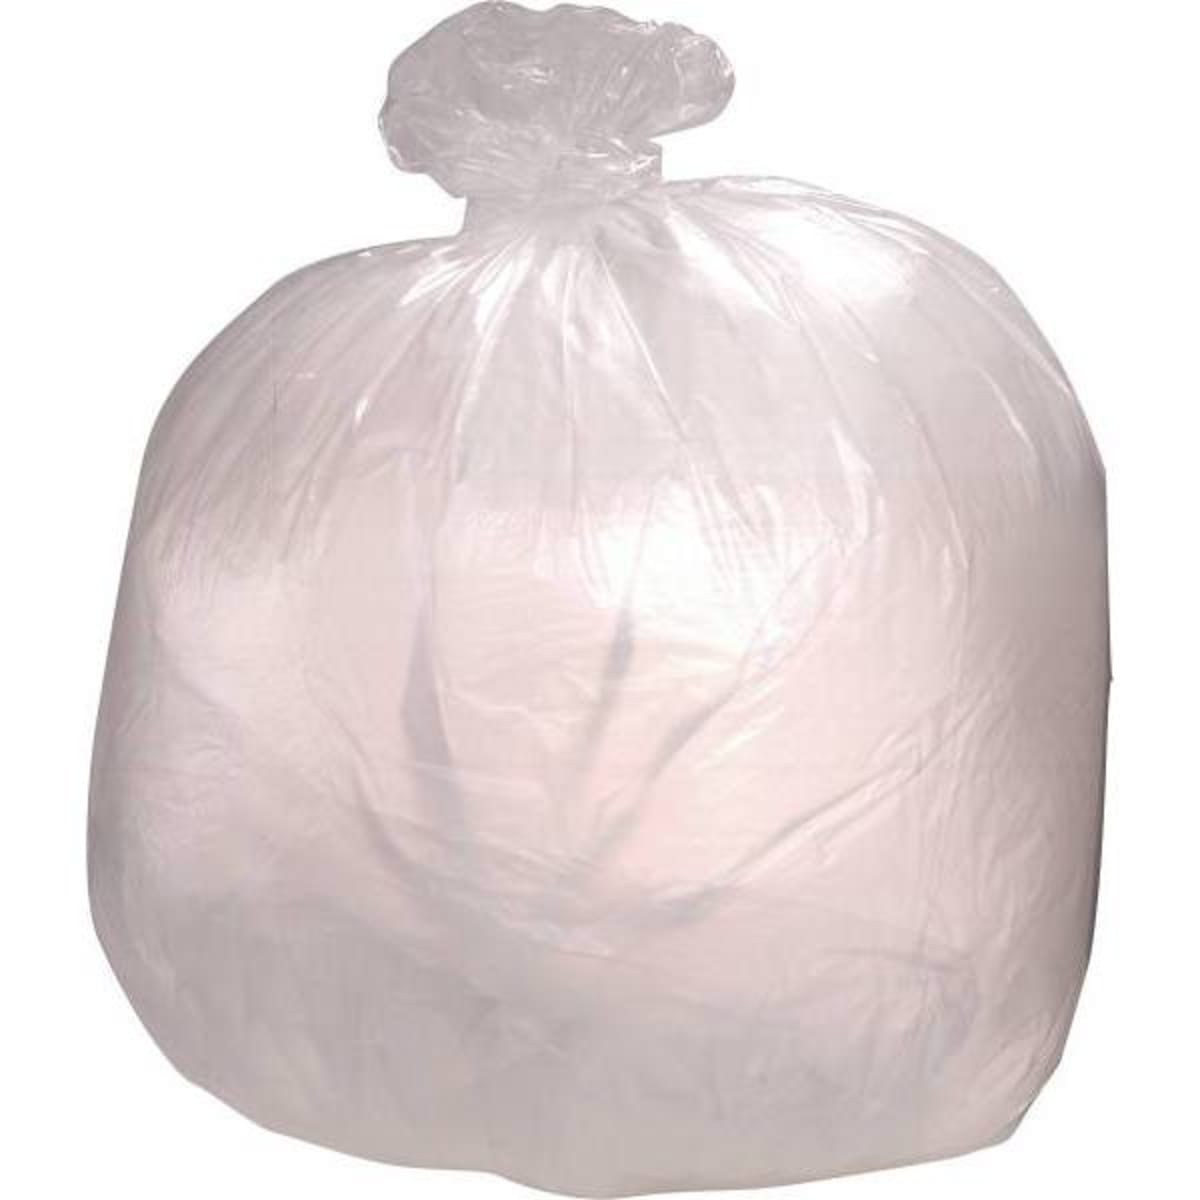 Colonial Bag Trash Bag Medium Duty 30 X 36 30 gal. 0.45 mil Case